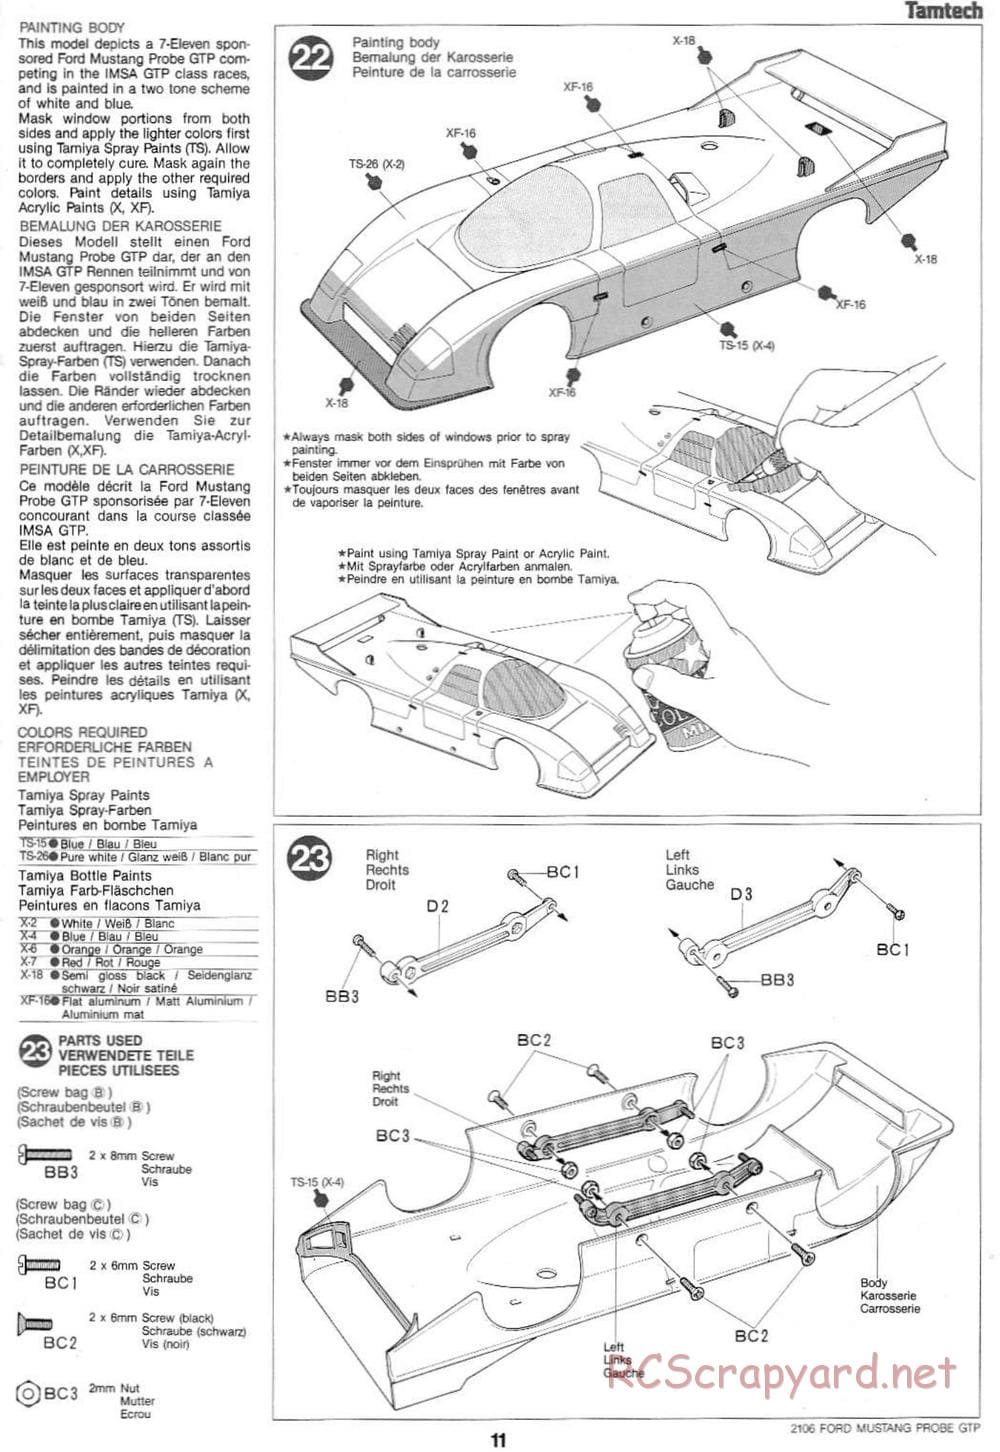 Tamiya - Tamtech - Ford Mustang Probe GTP Chassis - Manual - Page 11